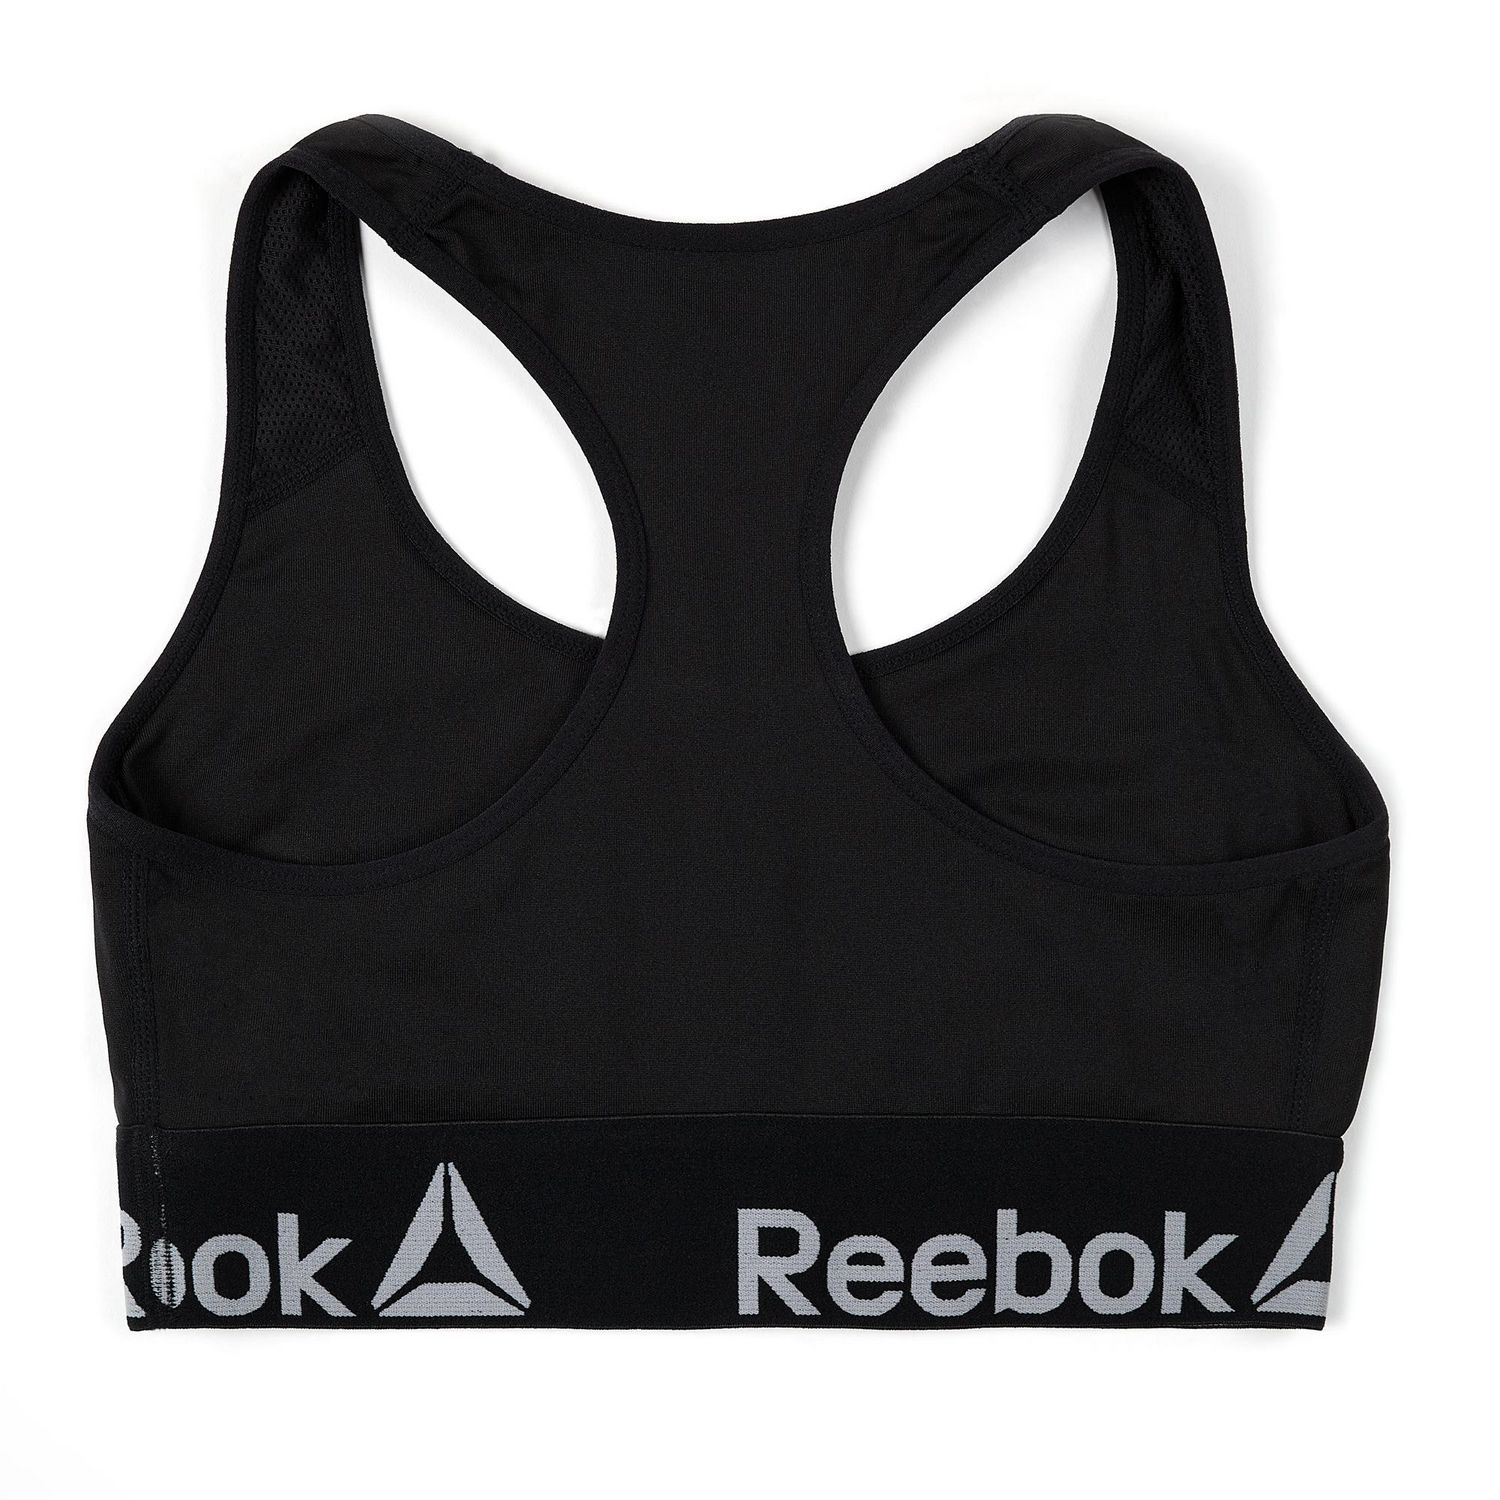 Reebok Black Sports Bra Quick Sweat Wicking 4XL / 26-28W